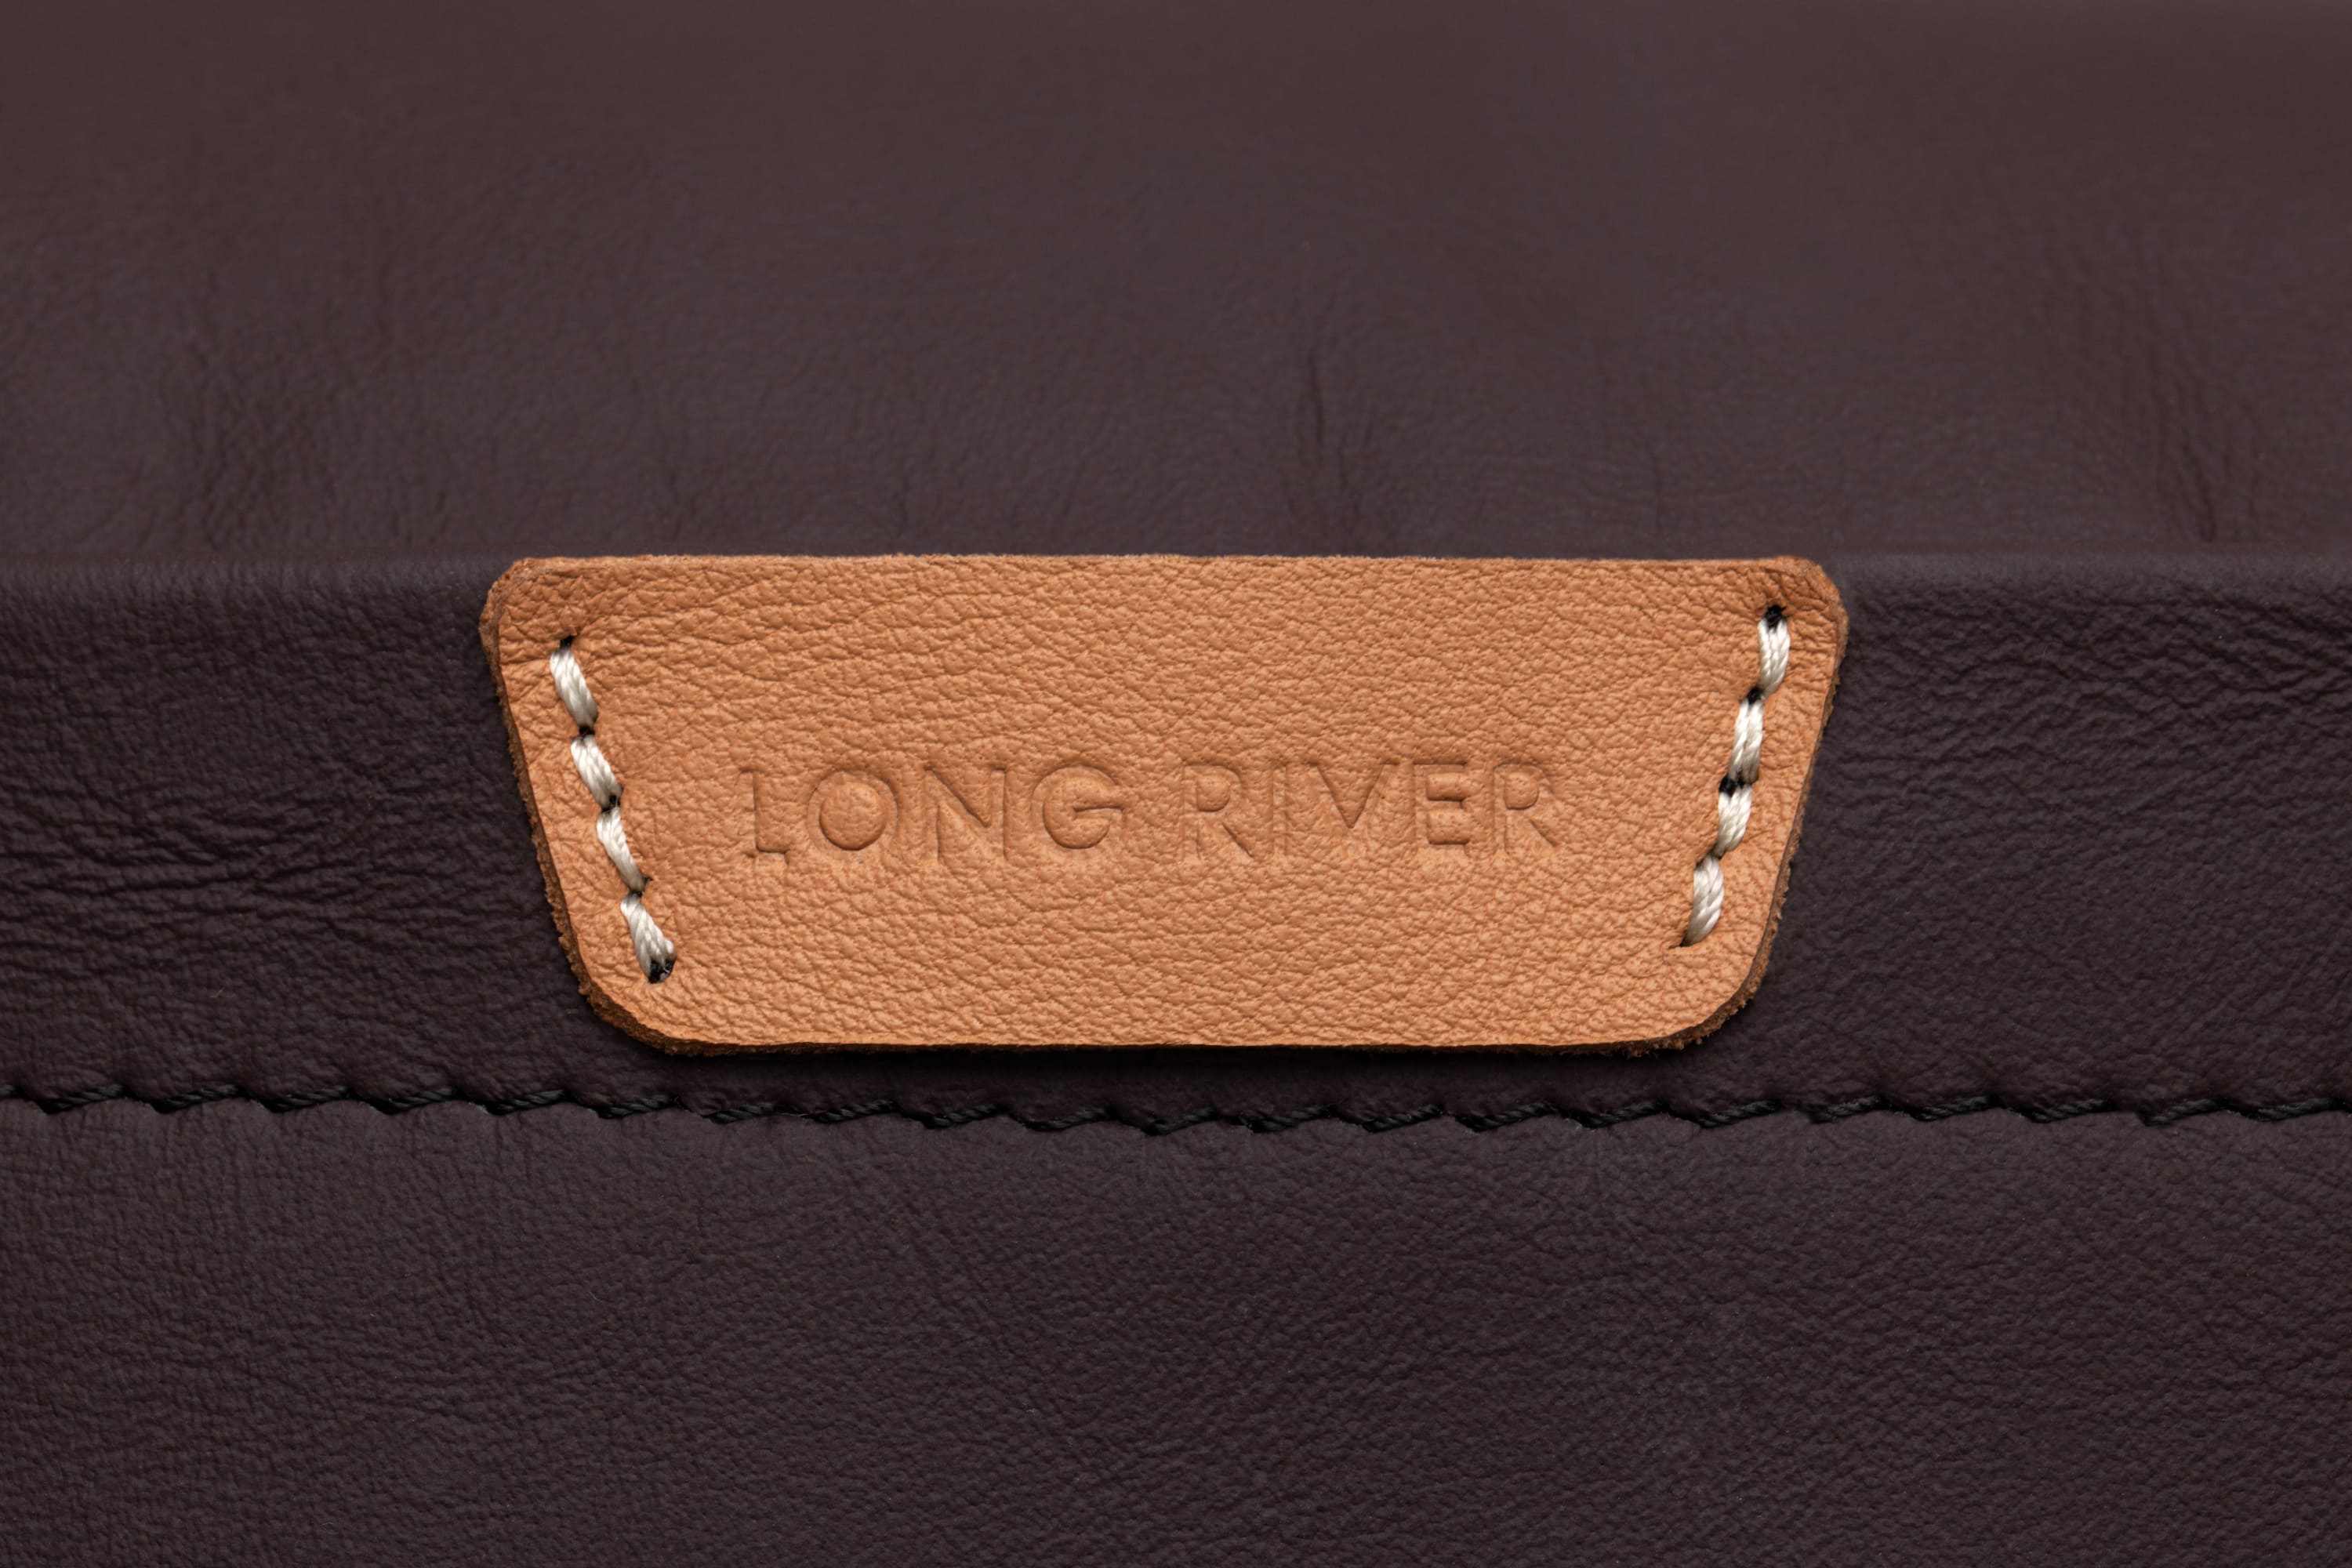 логотип Long River